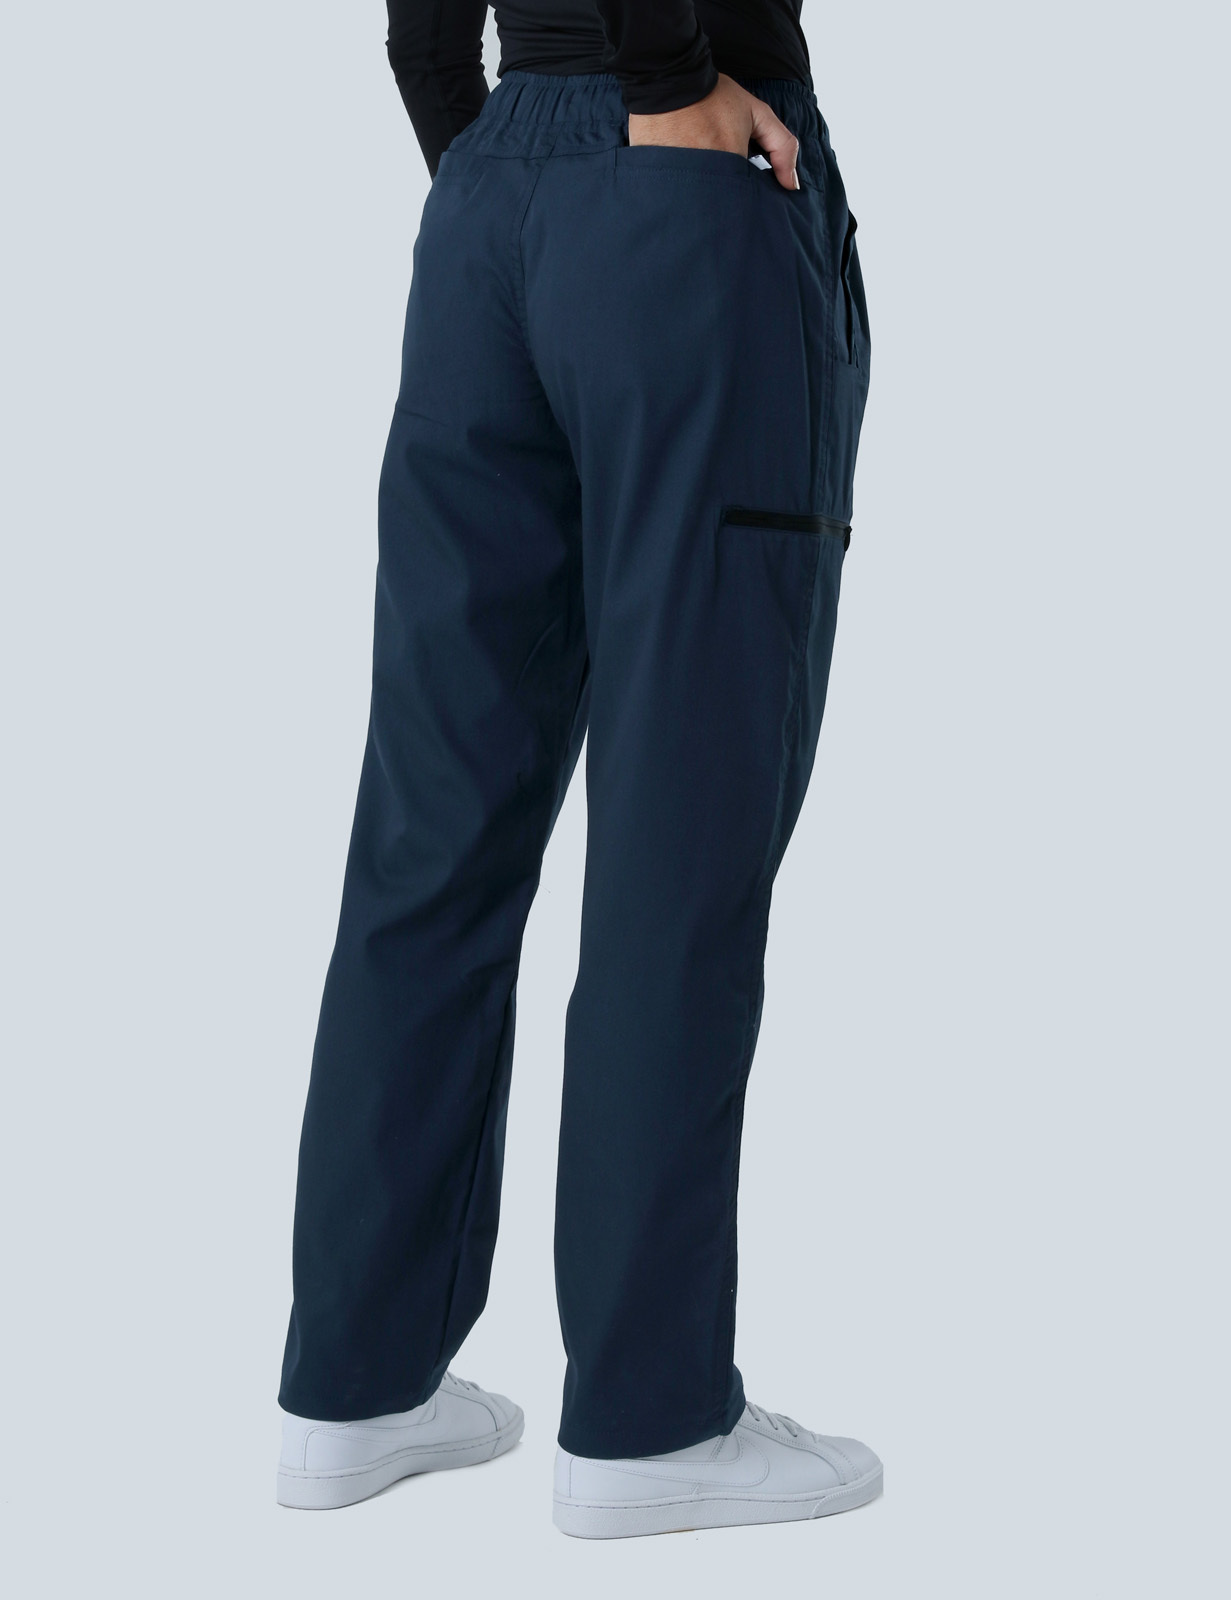 Women's Utility Pants - Navy - X Small - Tall - 2